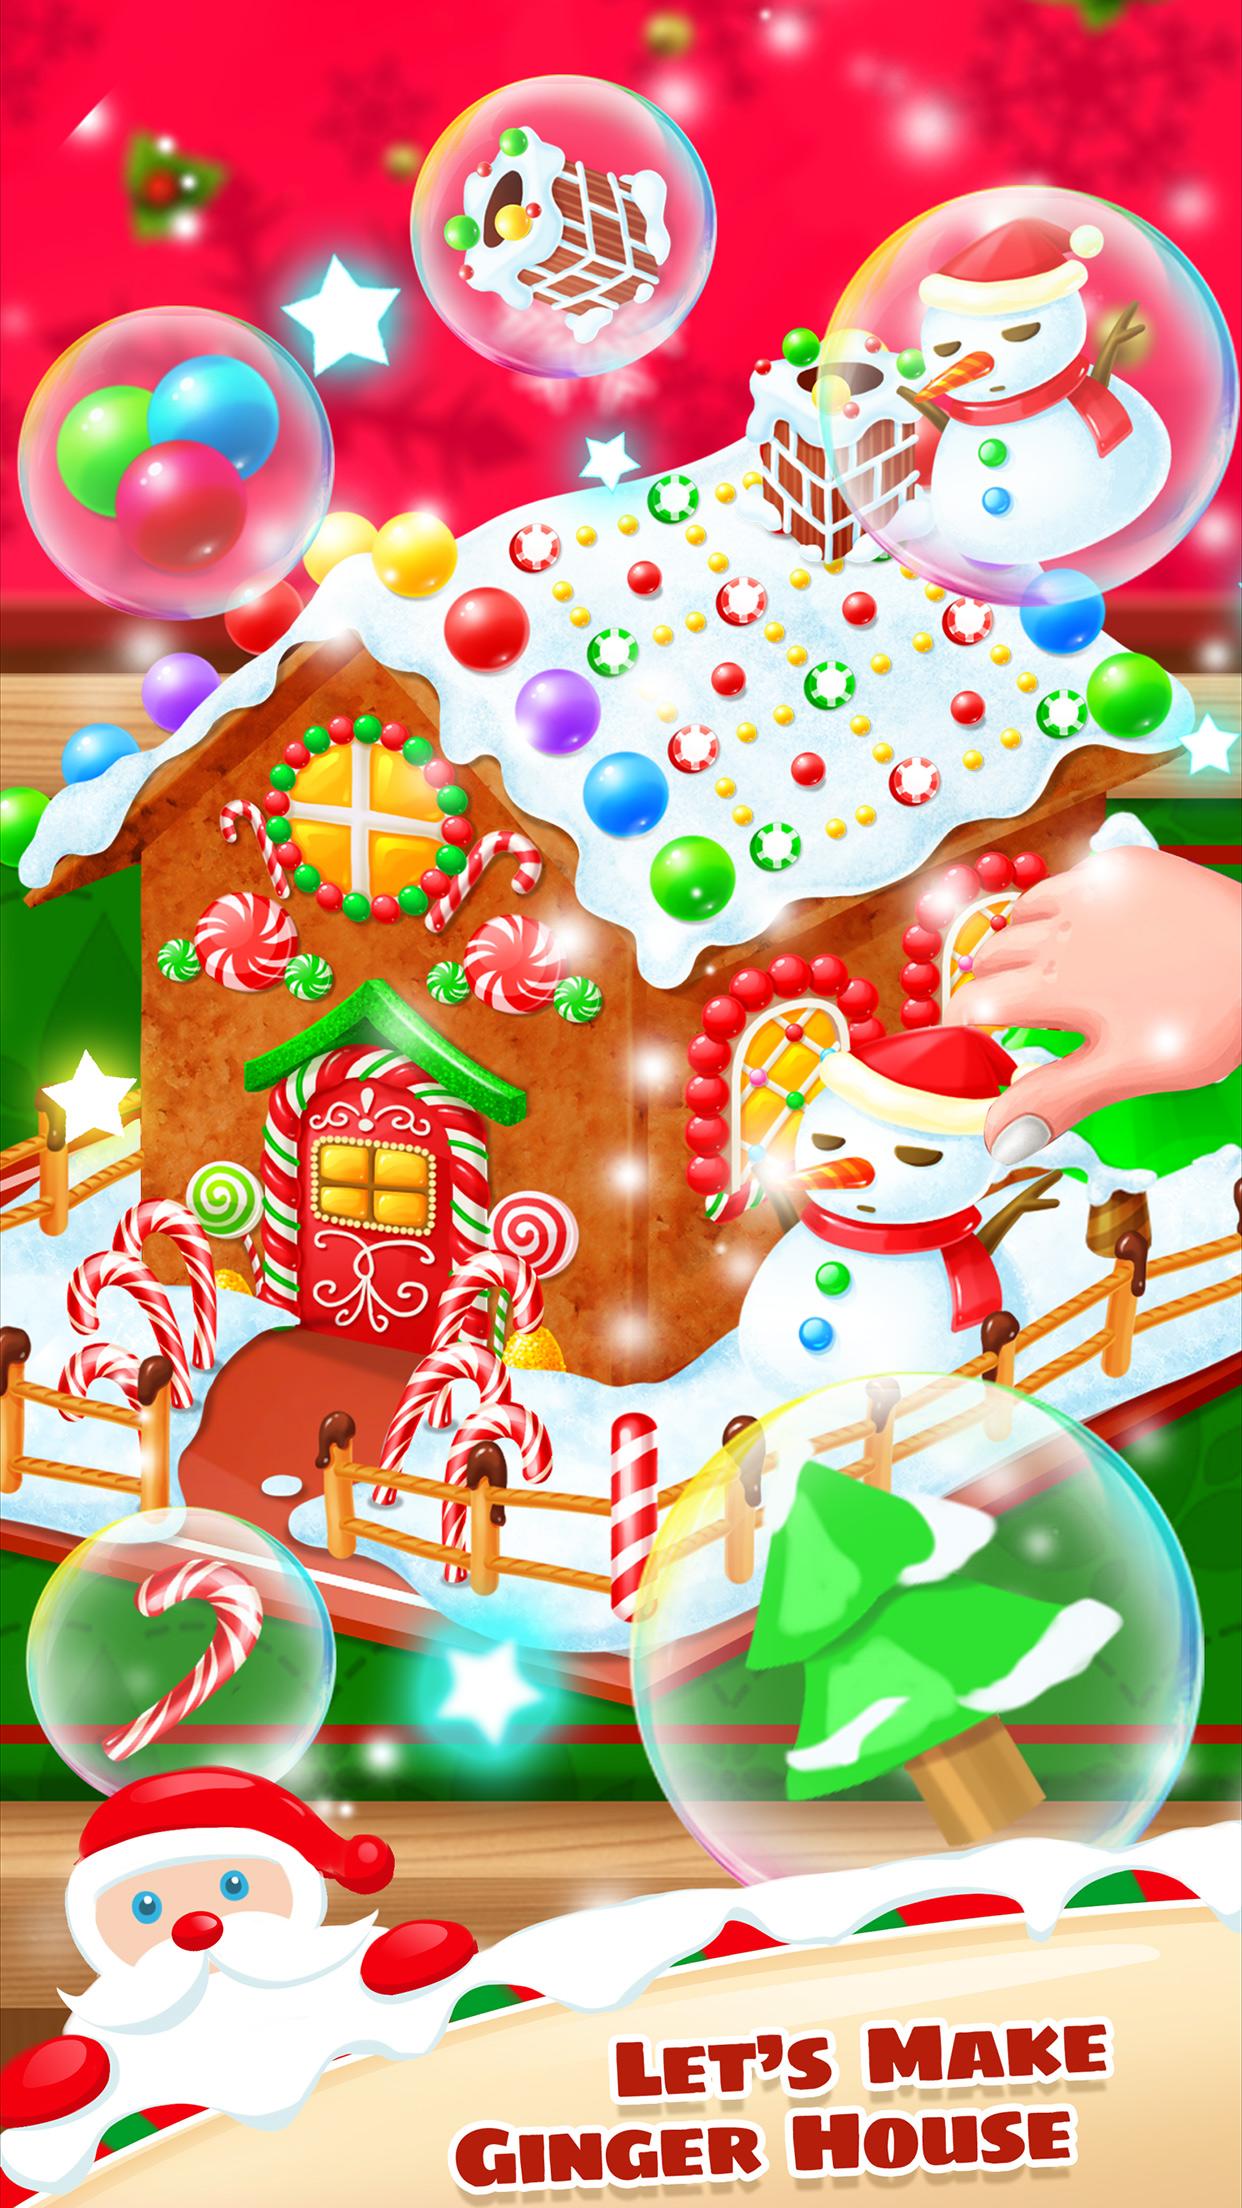 Christmas Cookies Party - Sweet Desserts 1.0 Screenshot 3